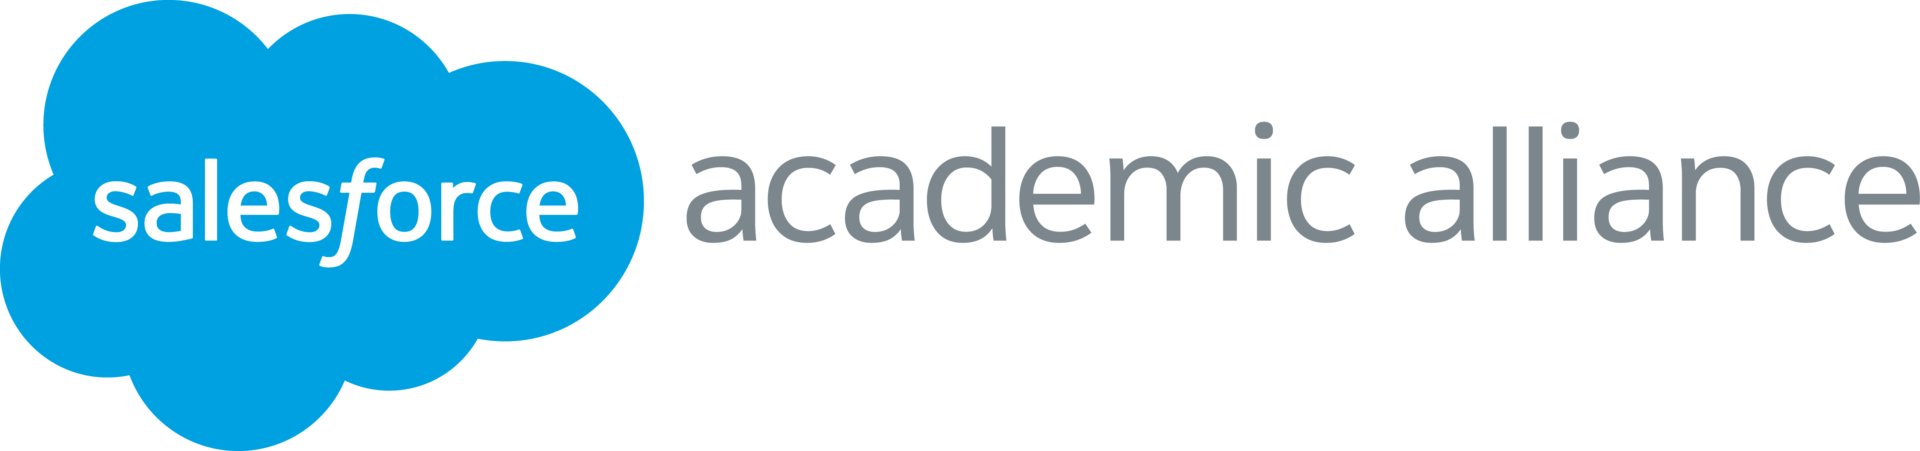 Salesforce Academic Alliance